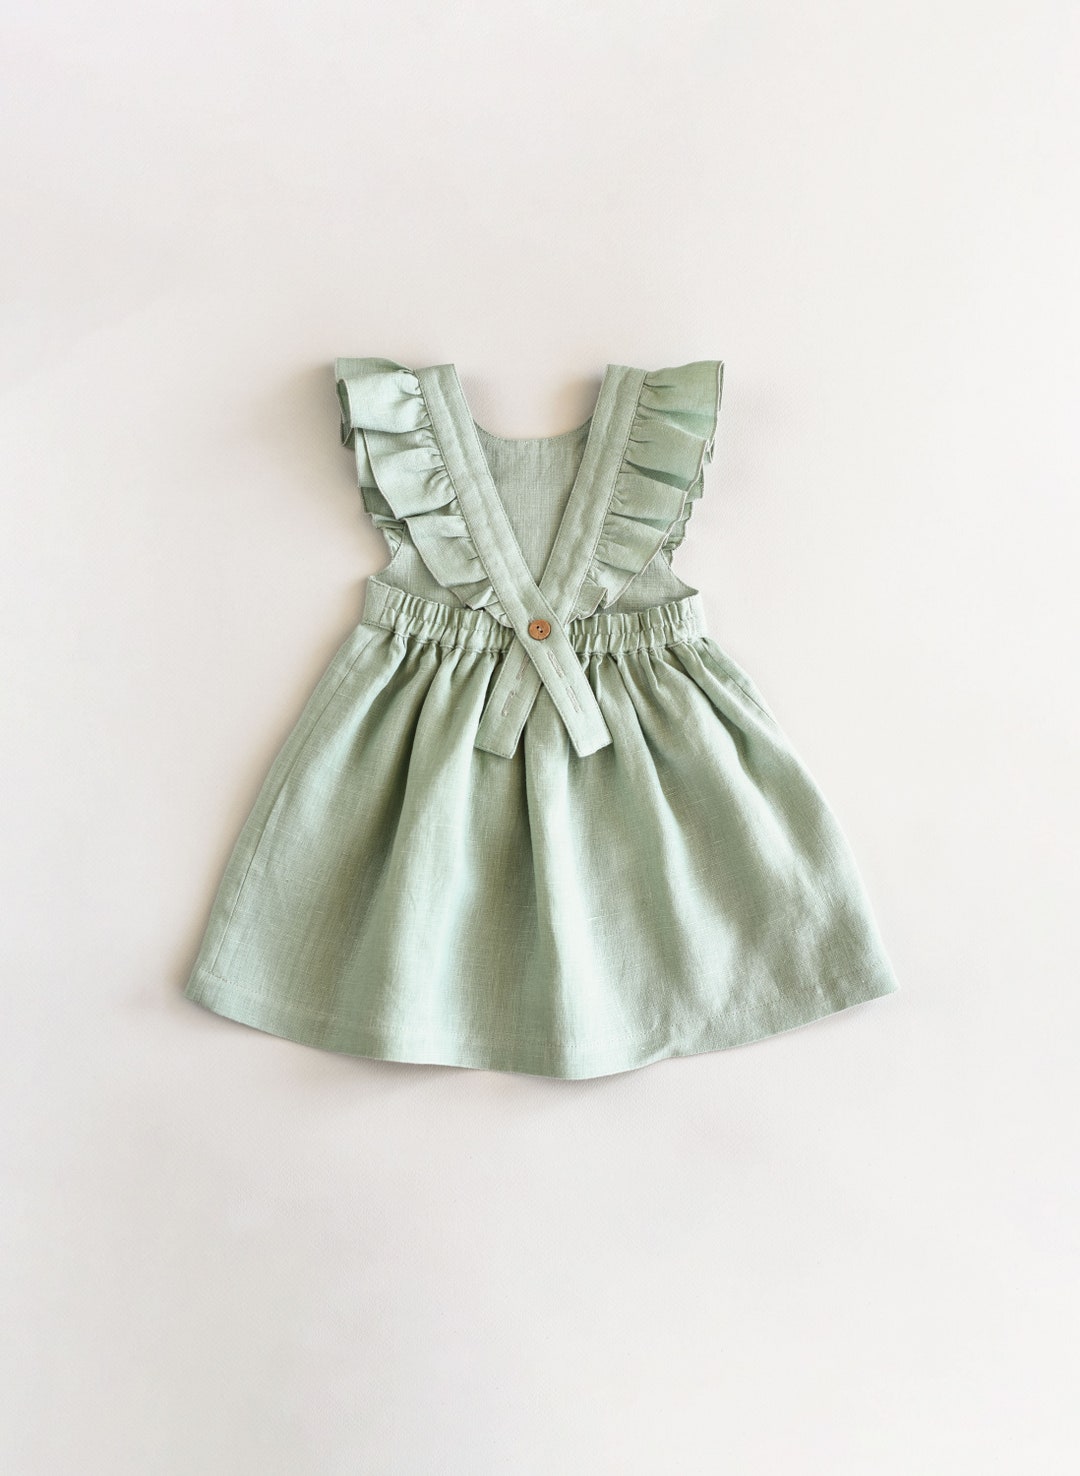 Girls Frilly Dress, Linen Baby and Toddler Dress, Baby Ruffle Dress ...